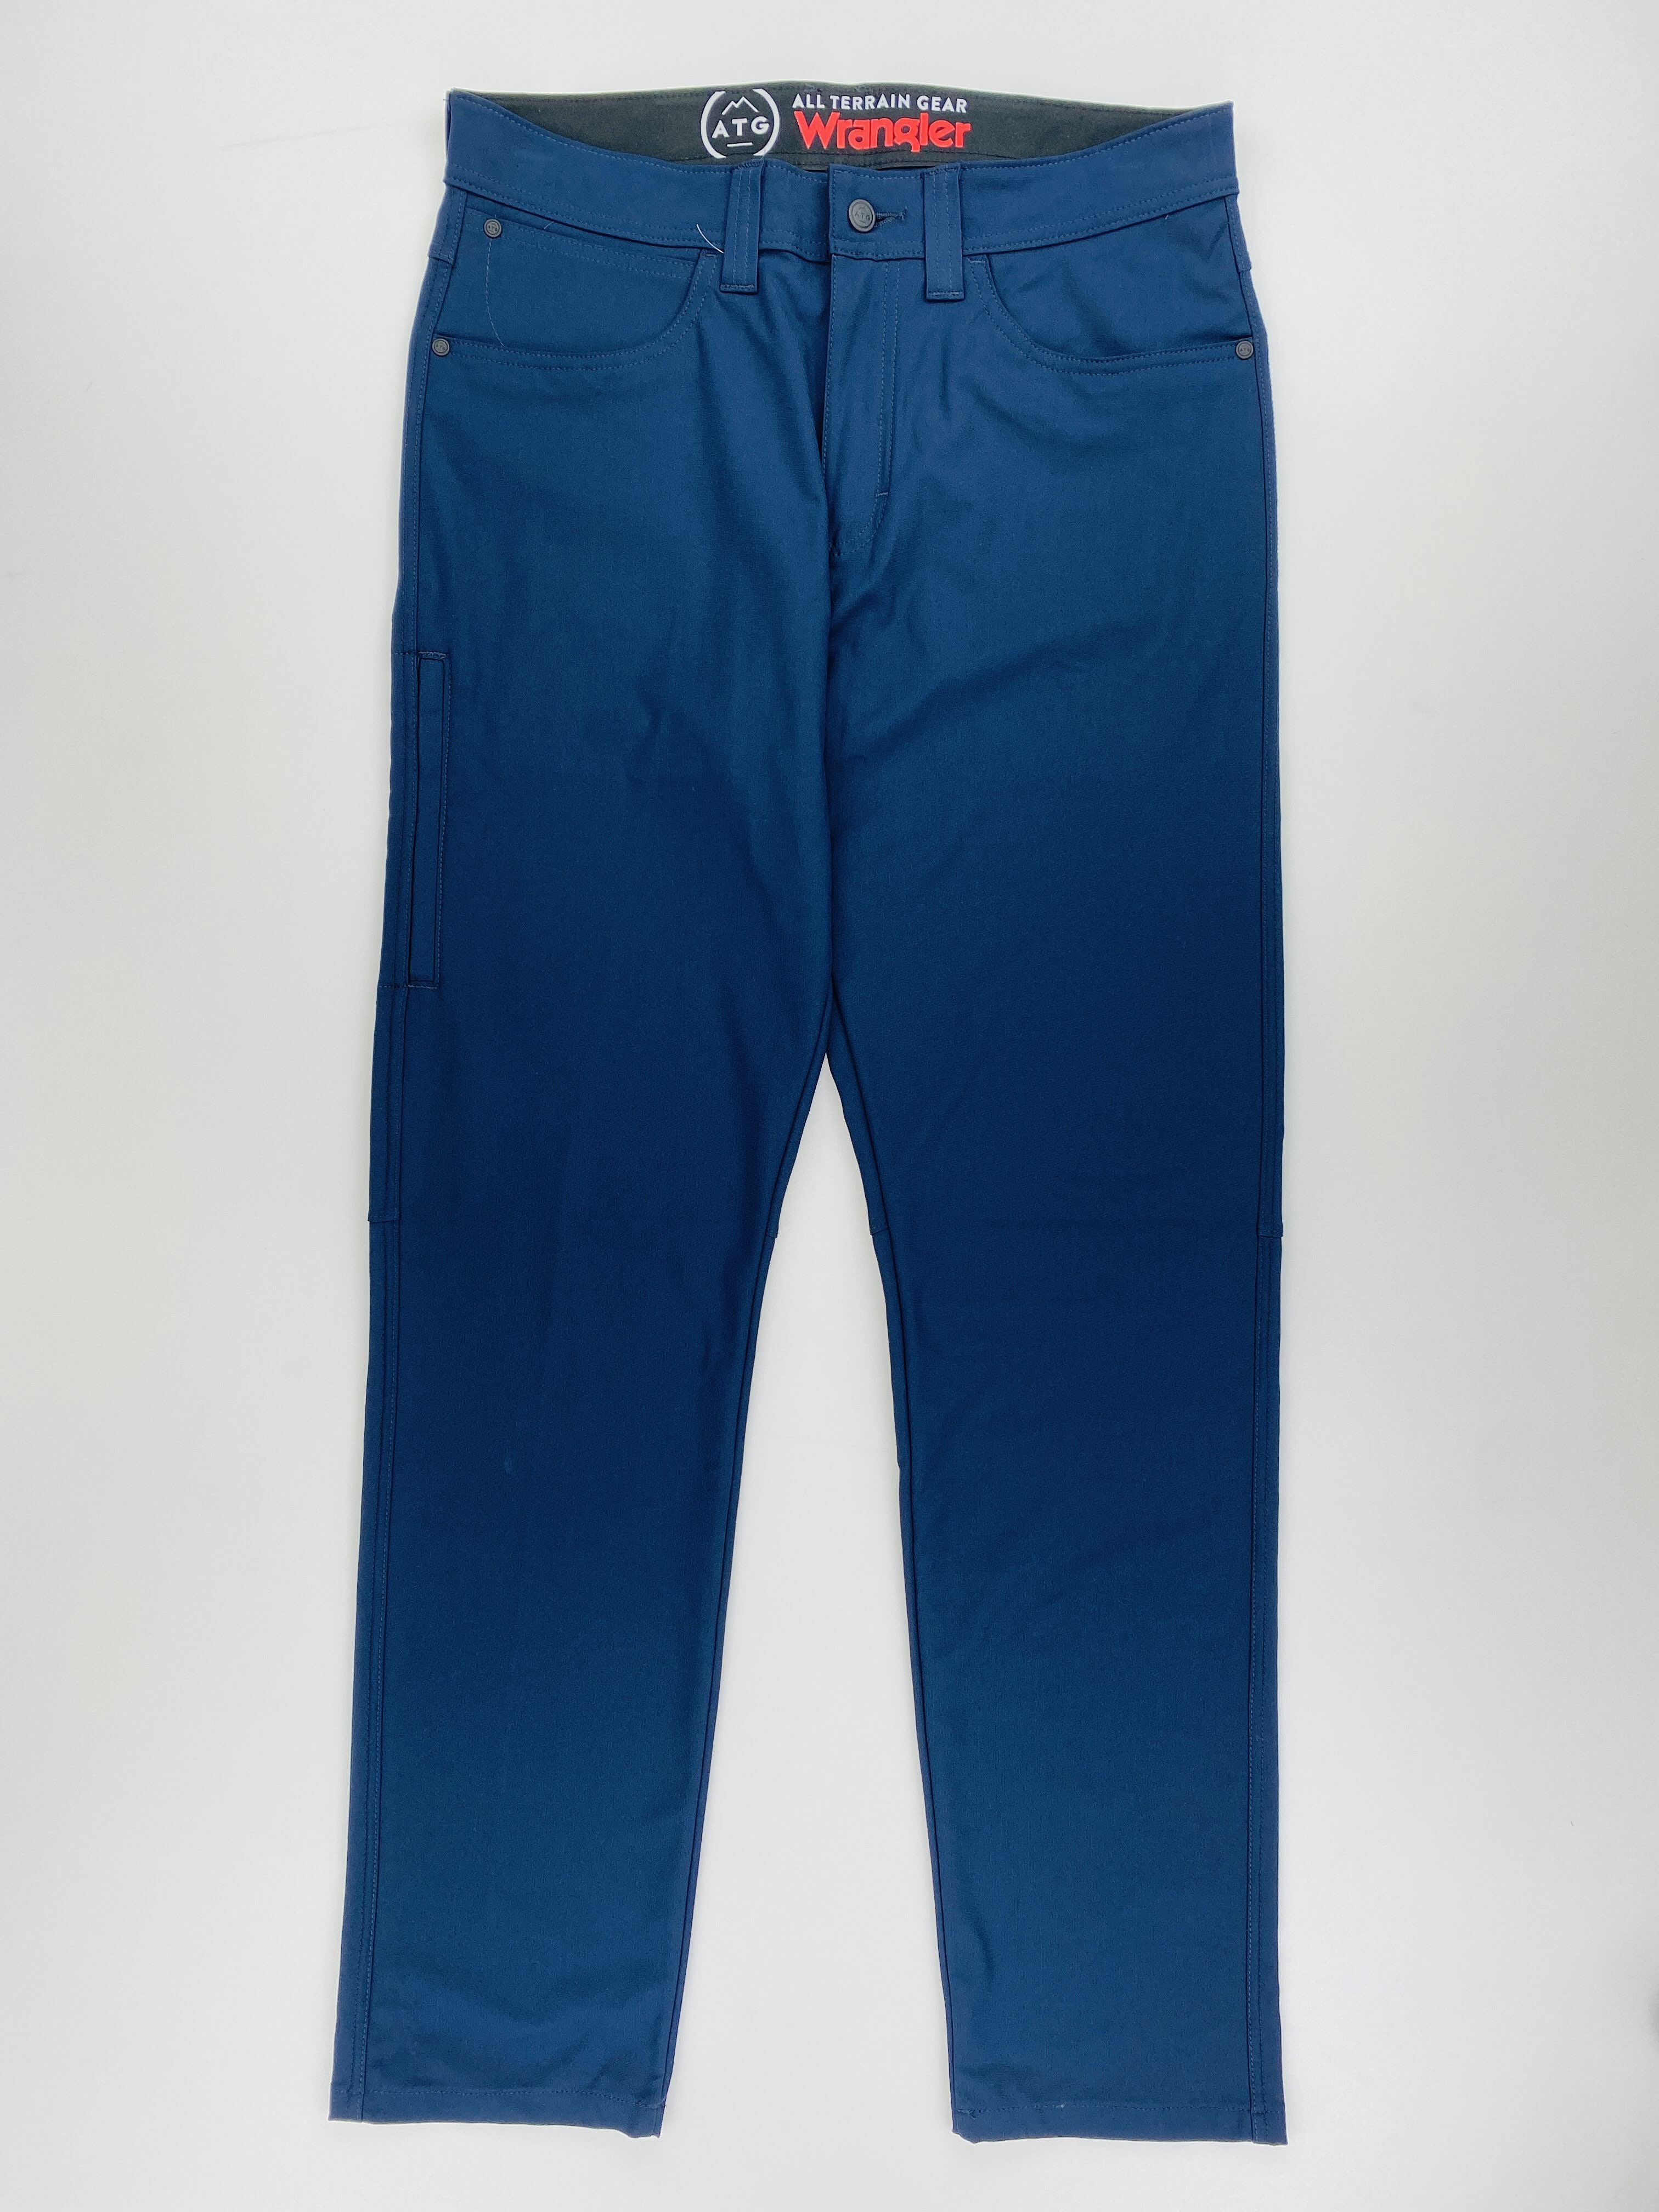 Wrangler Fwds 5 Pocket Pants - Second Hand Walking trousers - Men's - Blue - US 32 | Hardloop